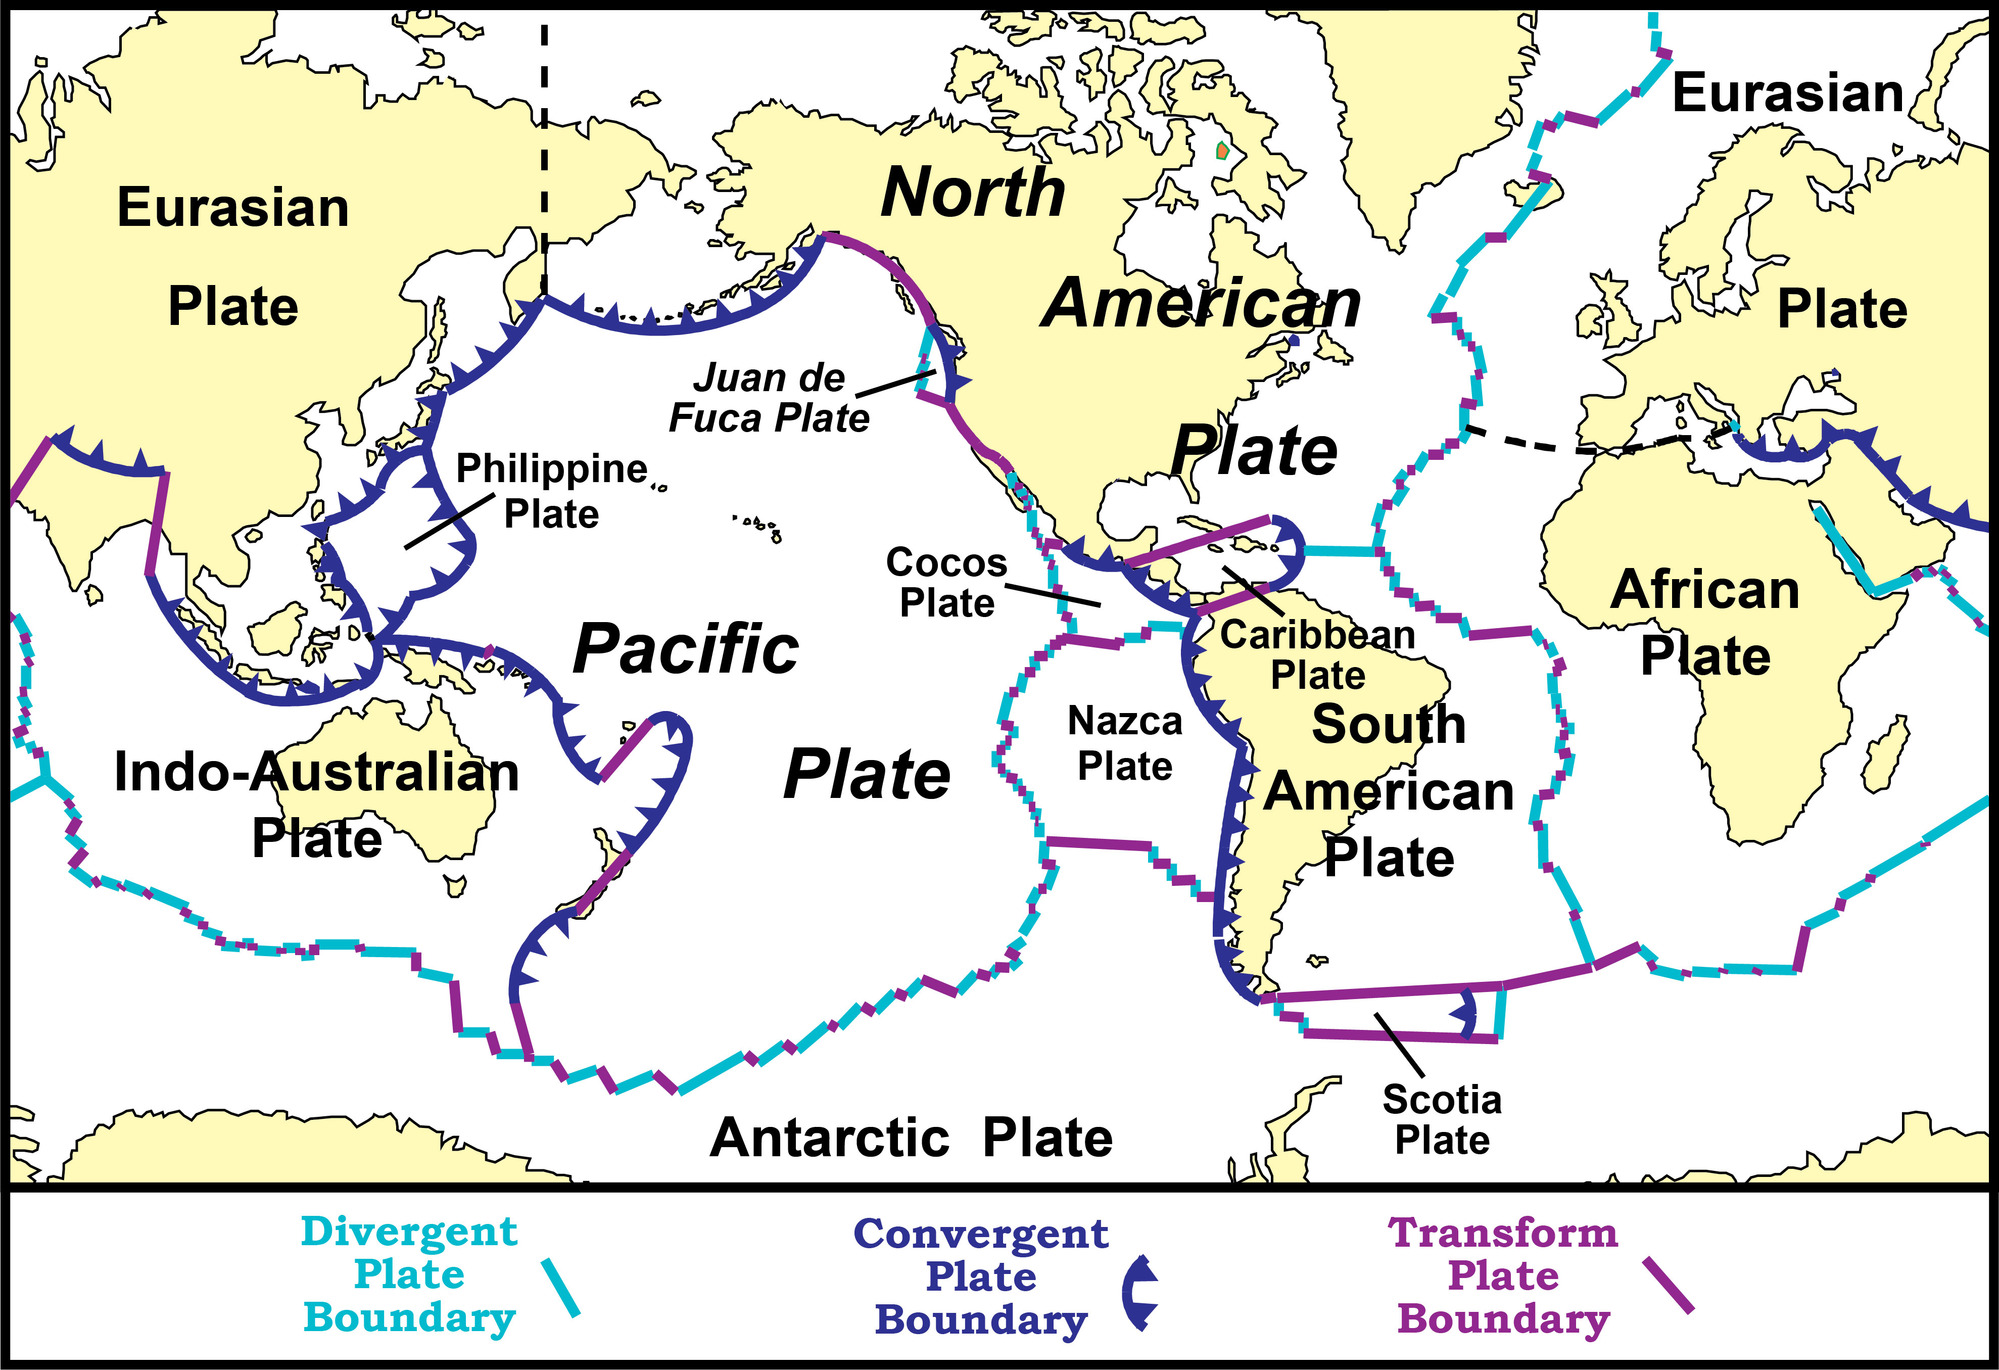 lithospheric plates diagram